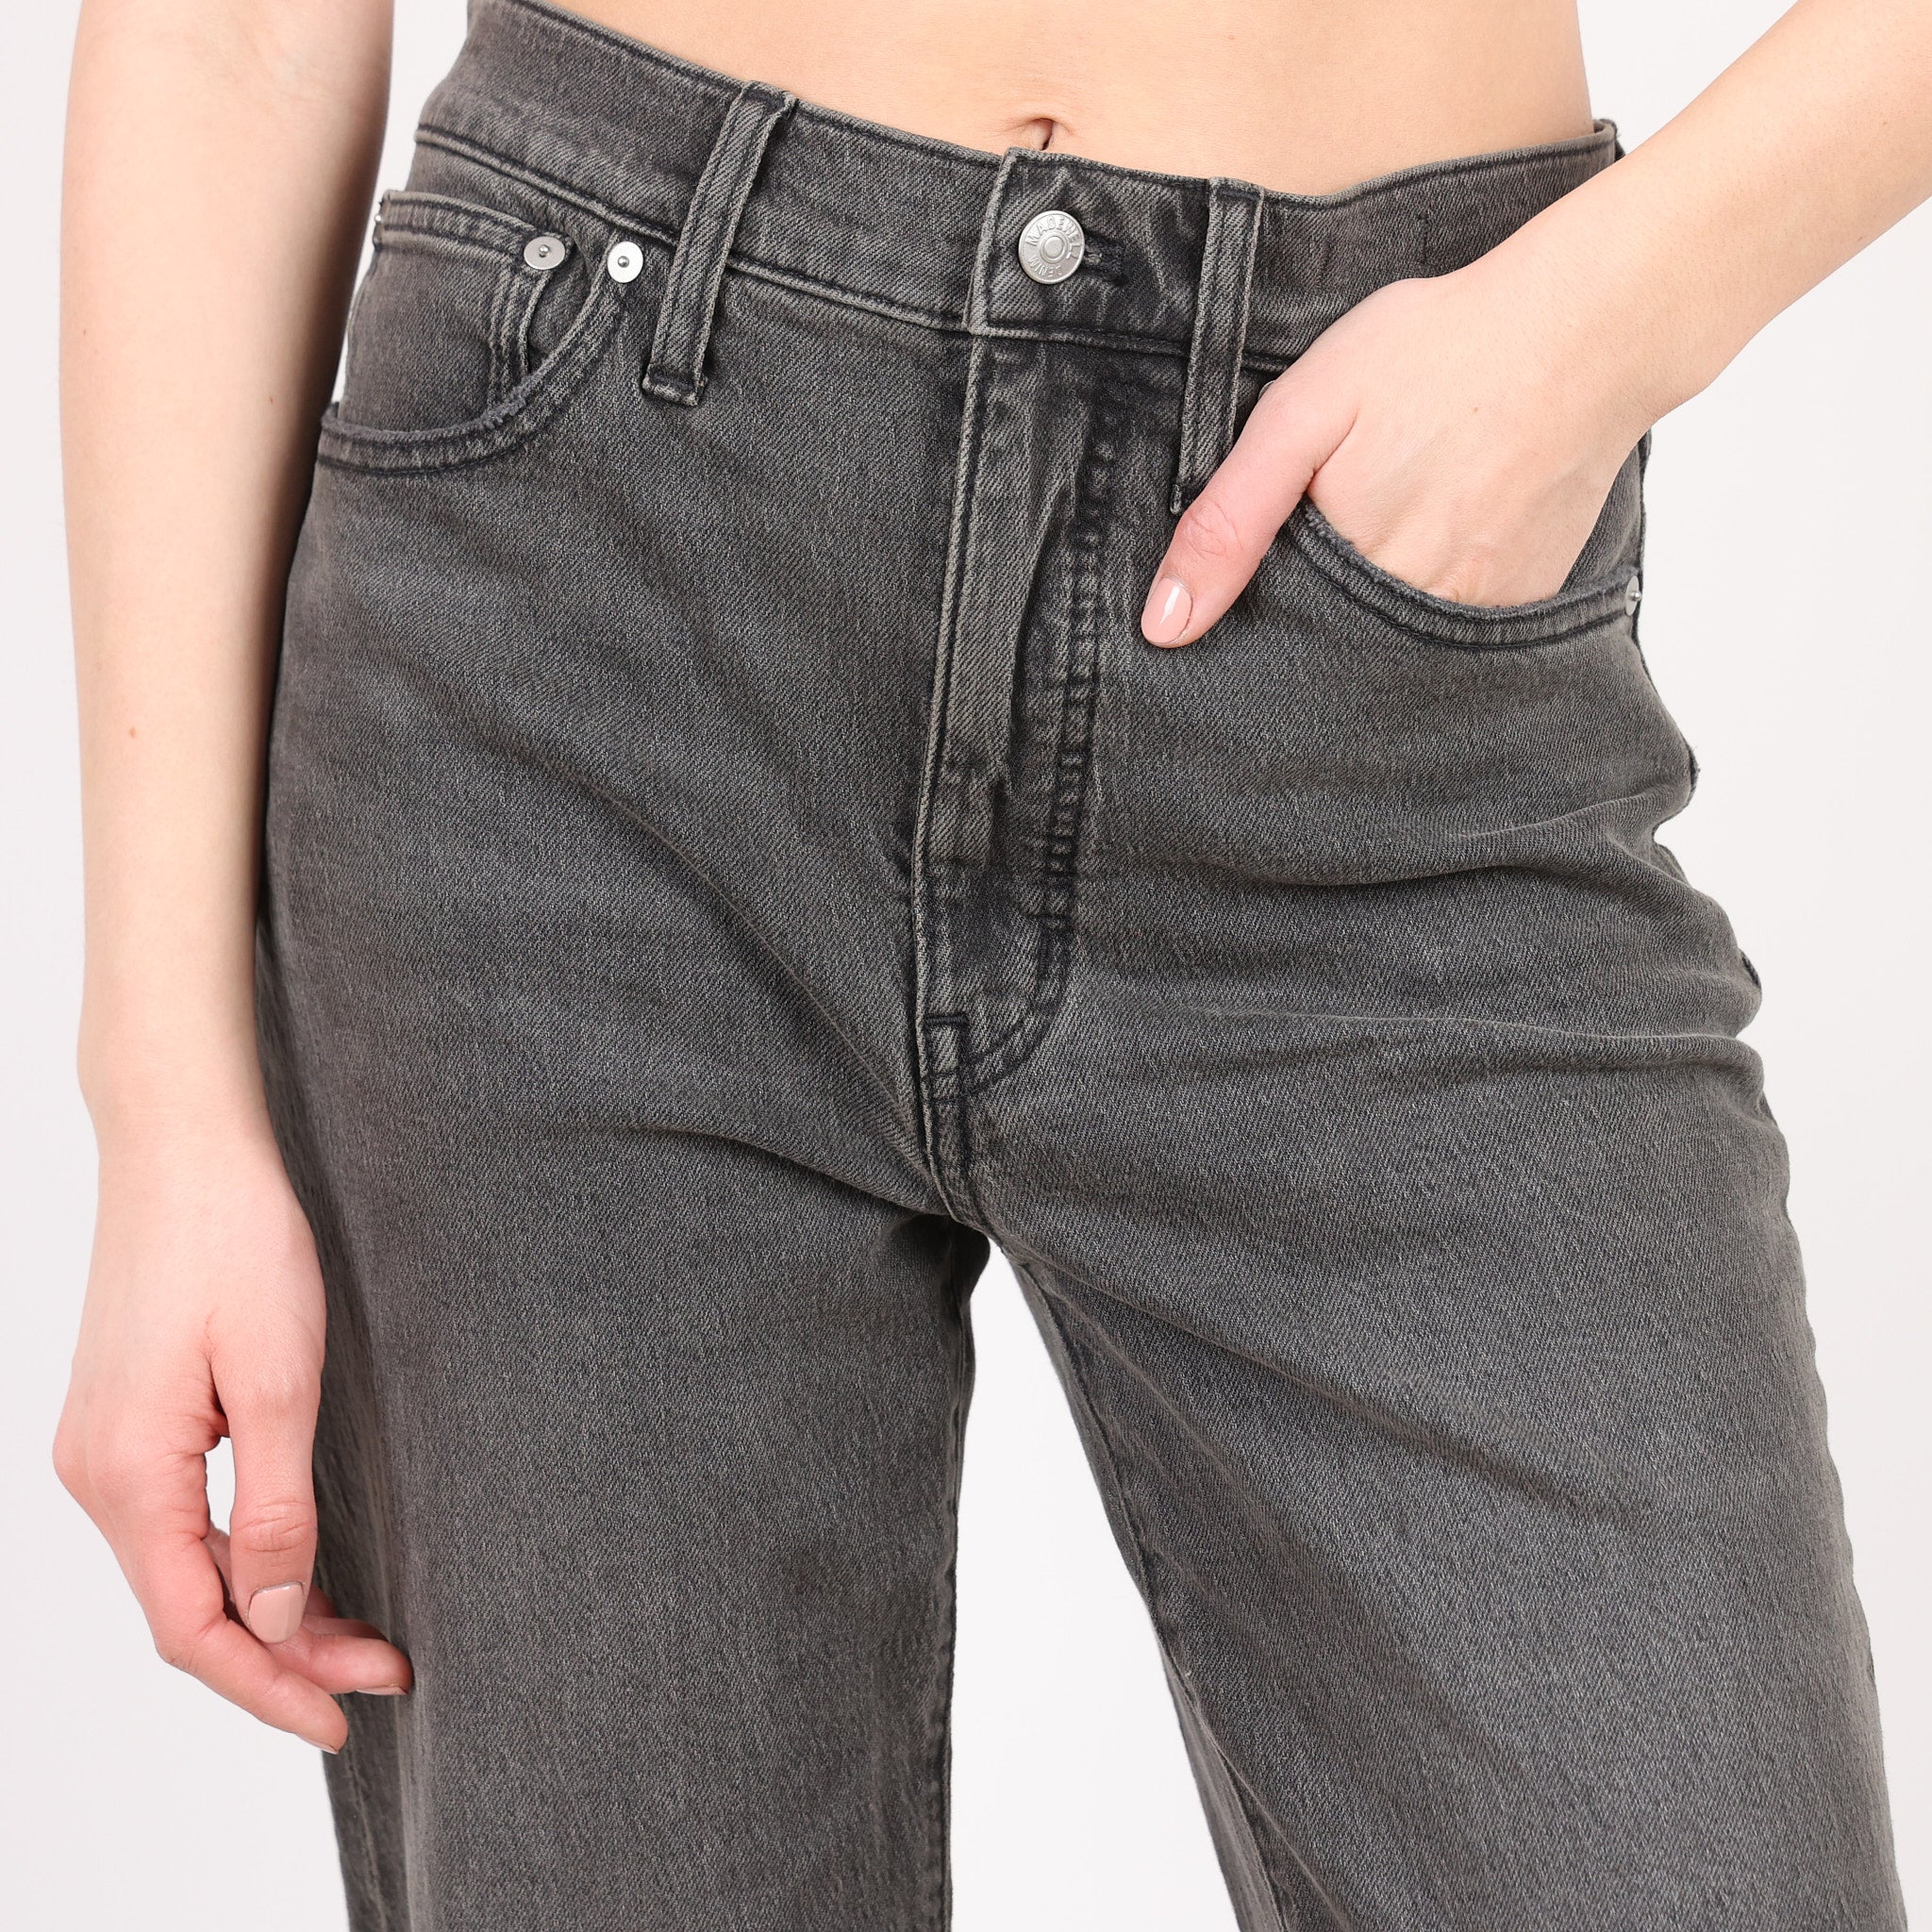 Jeans, UK Size 27